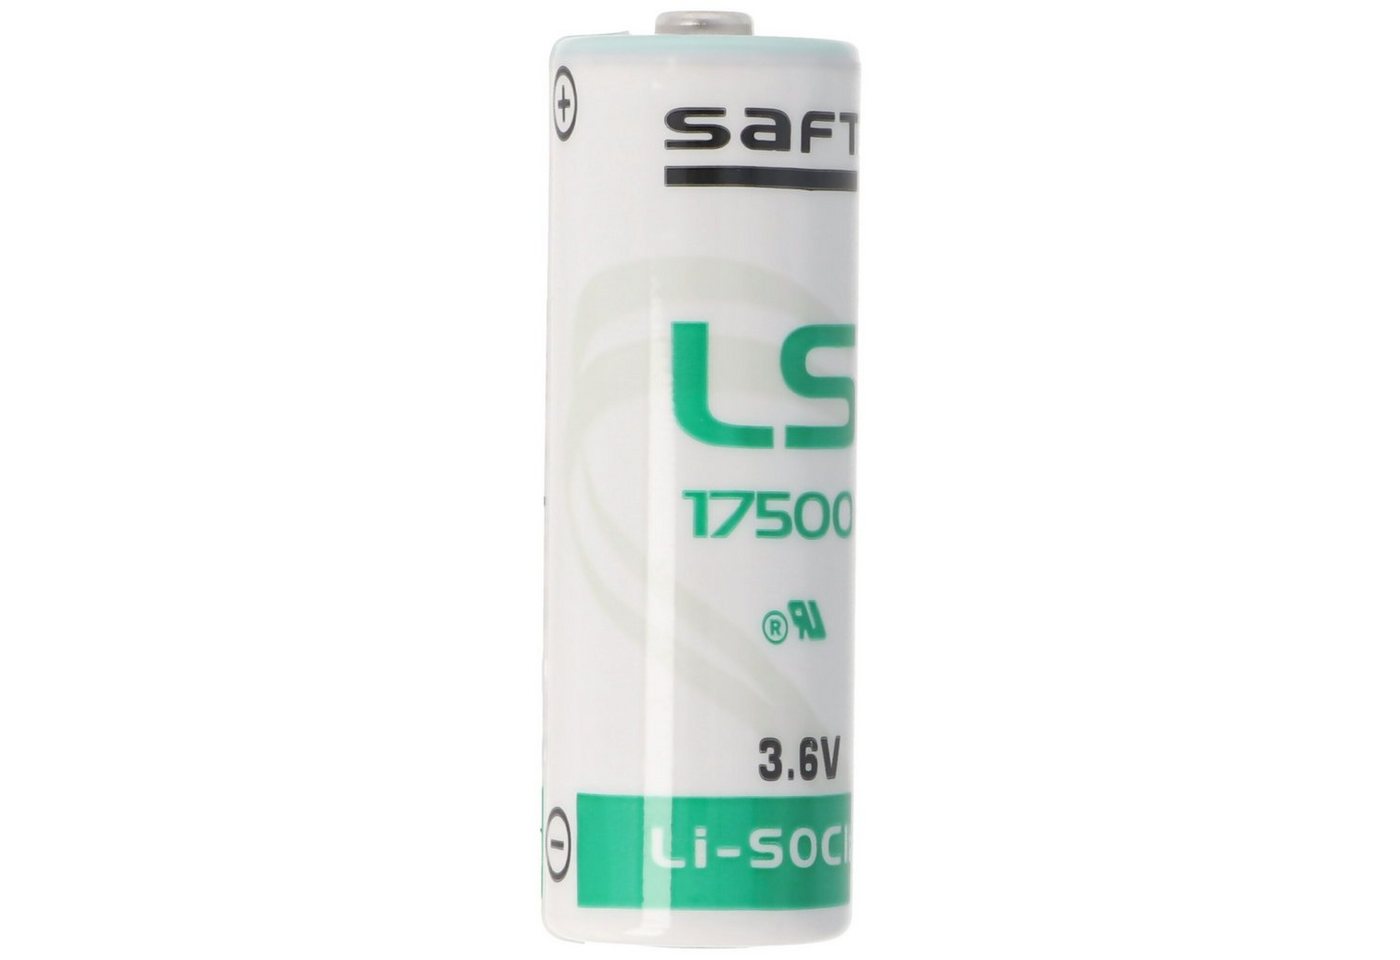 Saft SAFT LS17500 Lithium Batterie, Size A, ohne Lötfahne Batterie, (3,6 V) von Saft